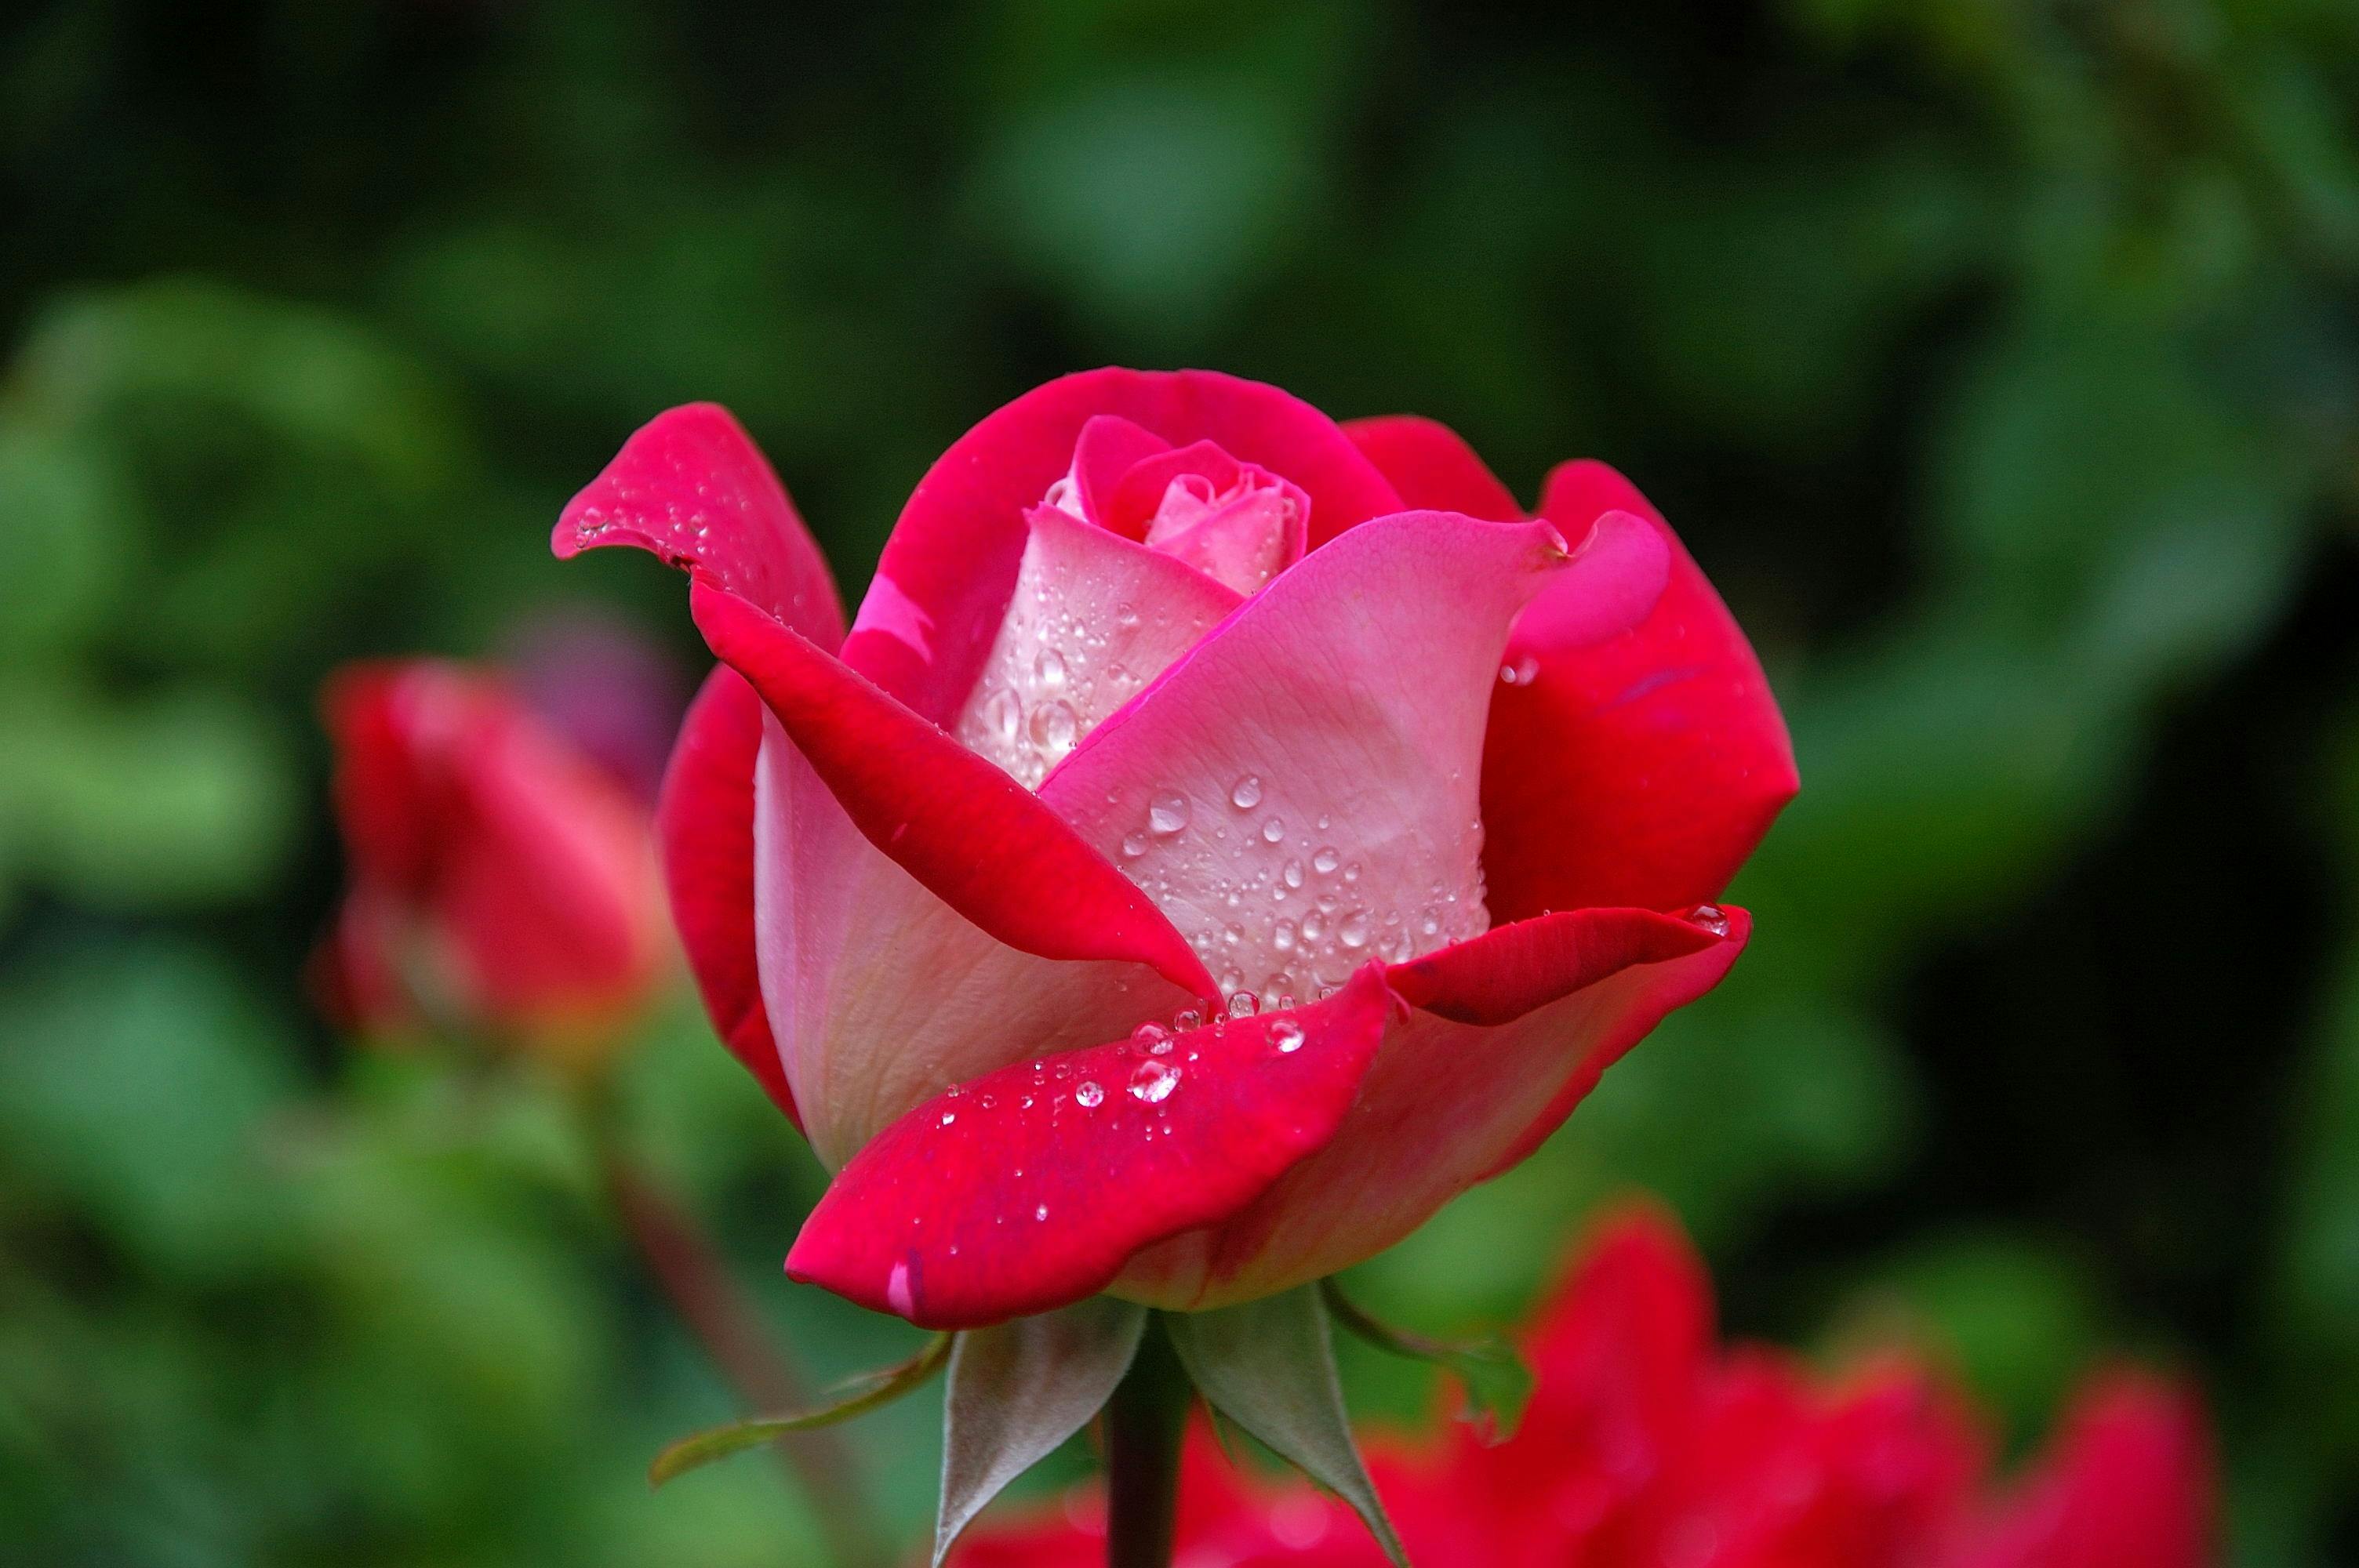 La rose à dix - Page 7 Garden-rose-red-pink-56866.jpeg?cs=srgb&dl=dewdrops-flora-flower-56866